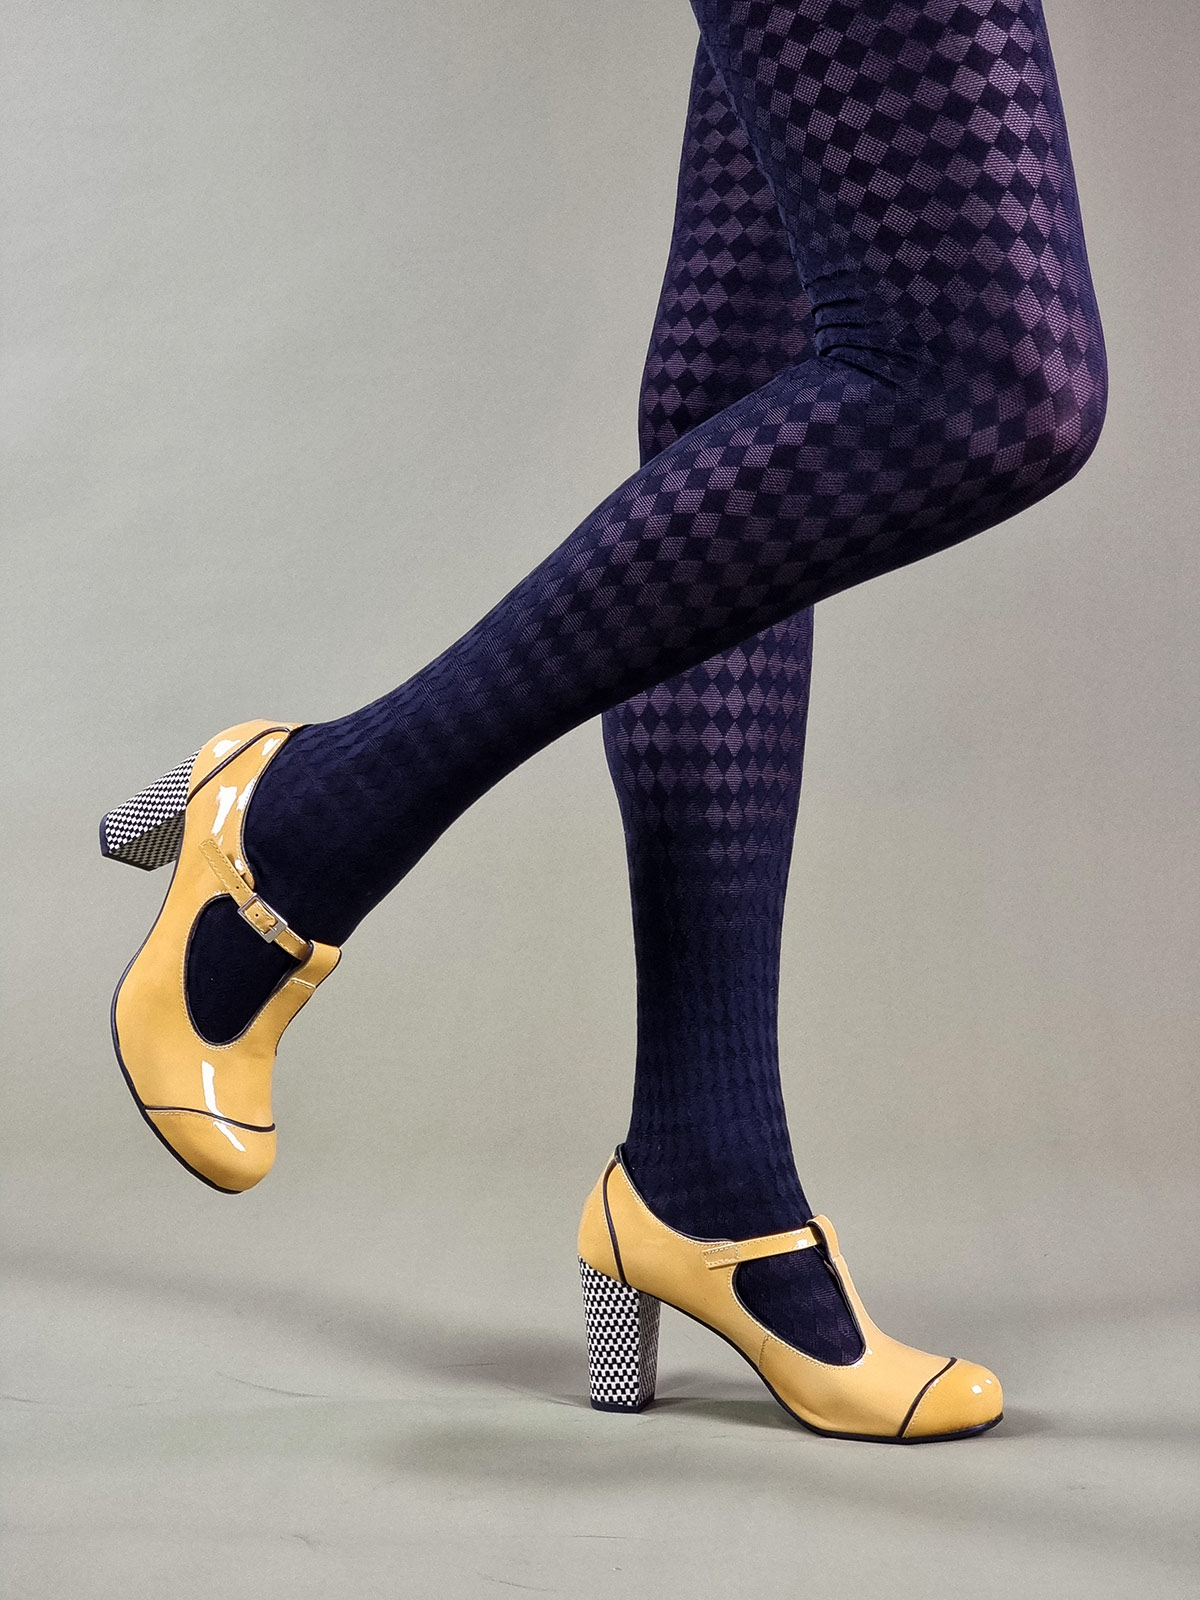 https://www.modshoes.co.uk/wp-content/uploads/2021/10/modshoes-ladies-retro-vintage-style-tights-07.jpg